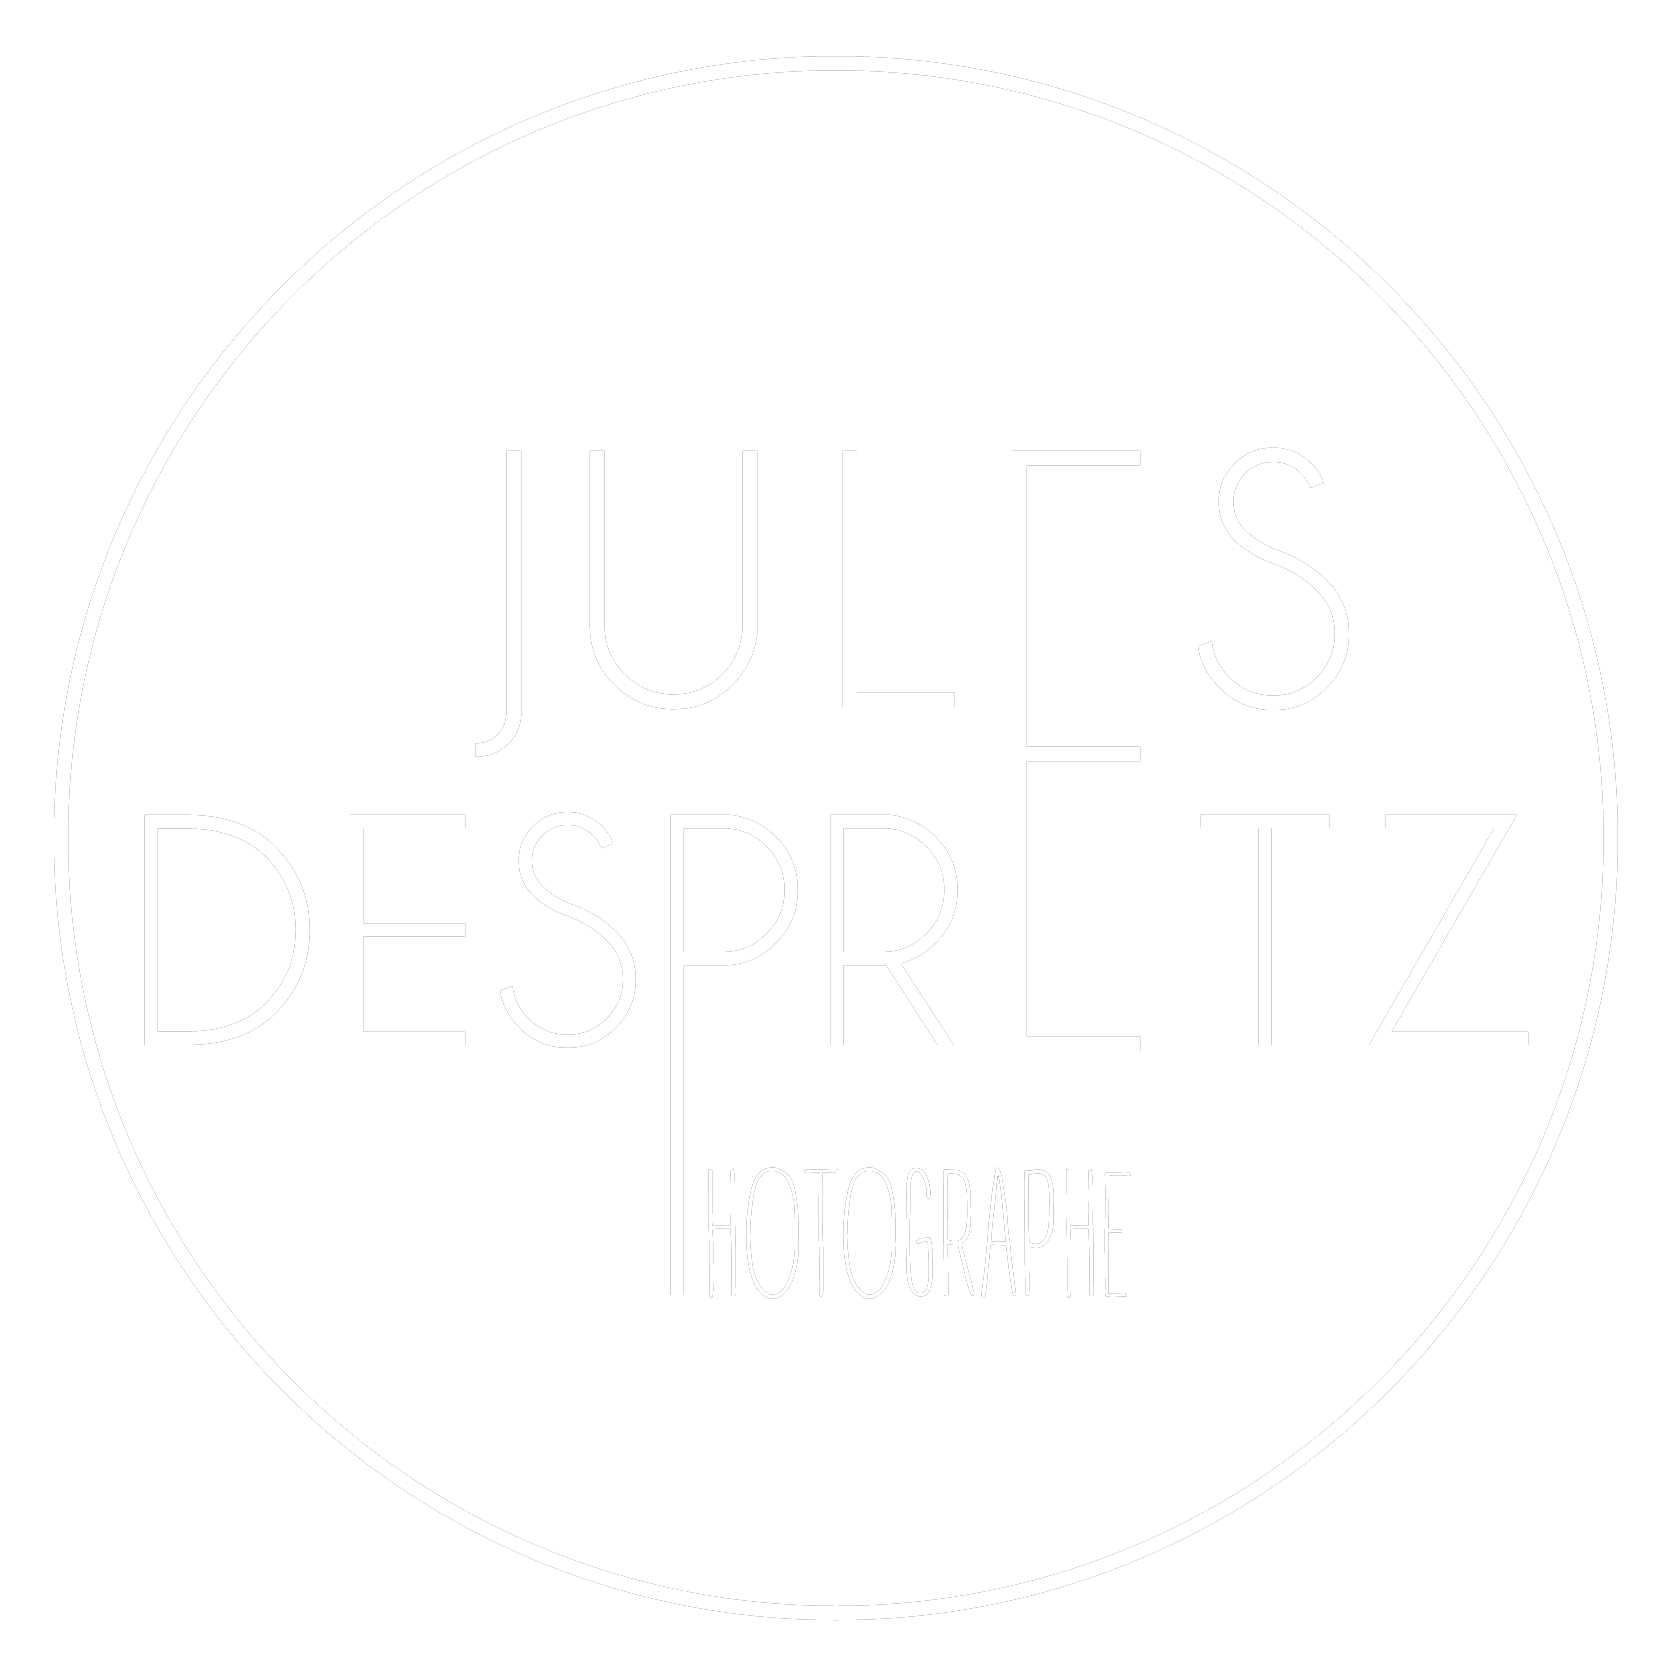 Jules DESPRETZ Photographe